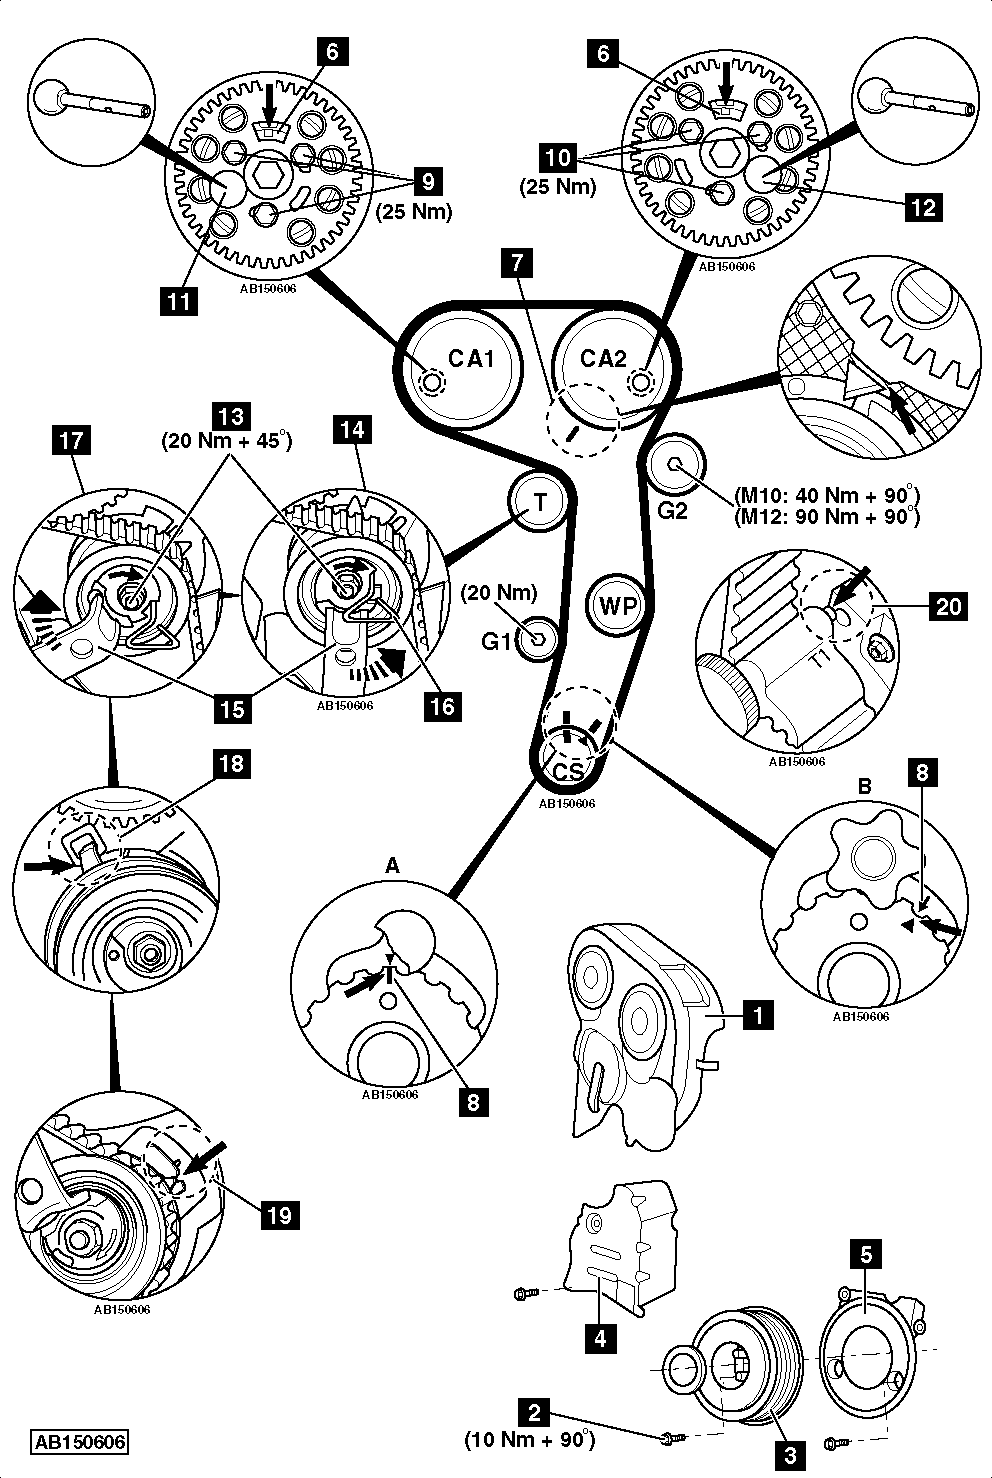 2001 Vw Jetta Radio Wiring Diagram
